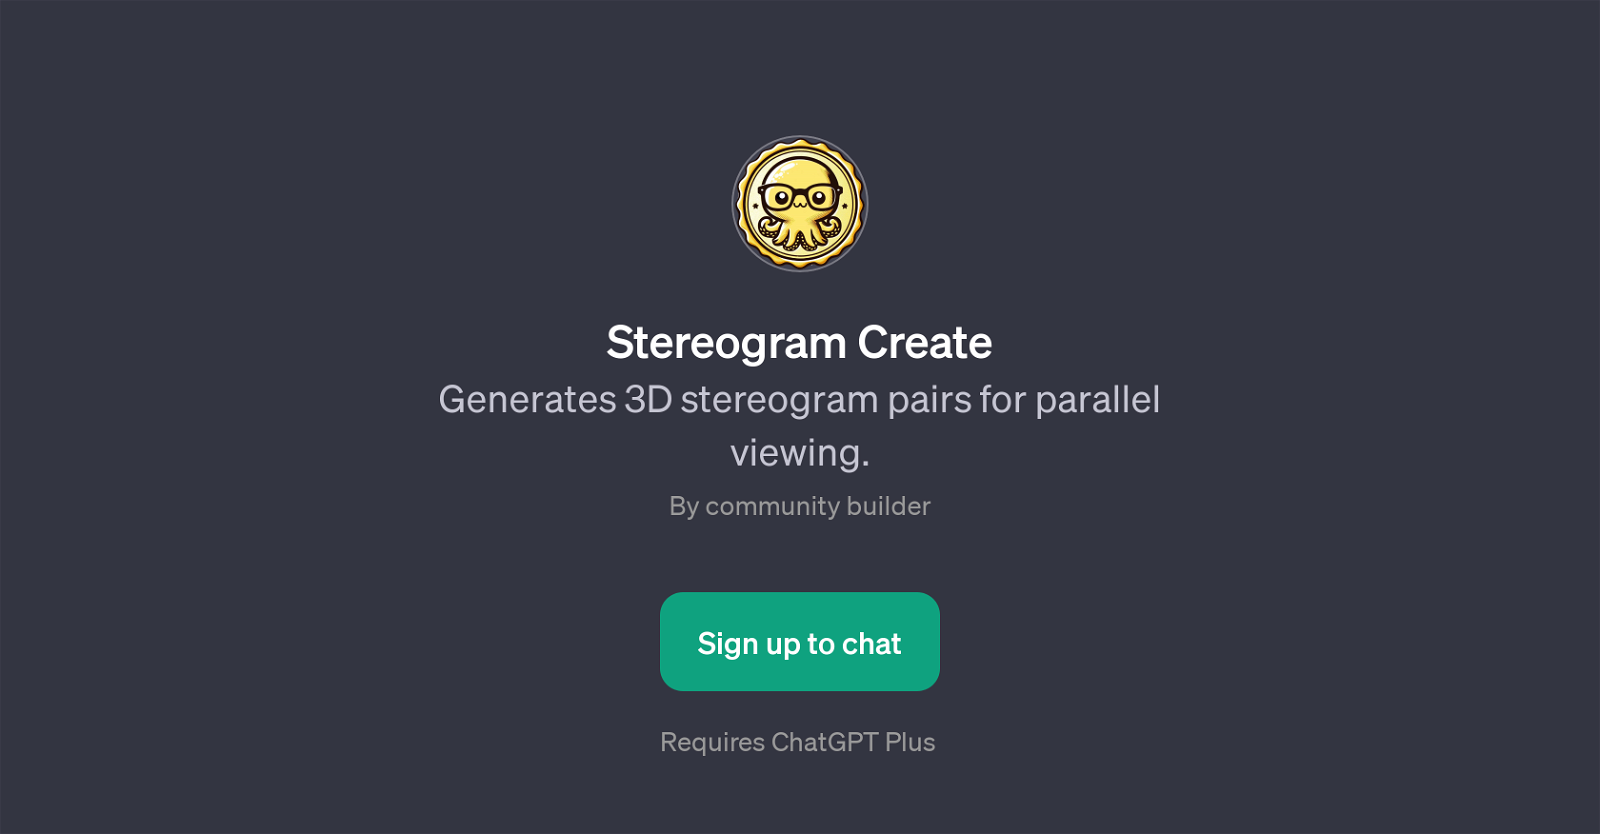 Stereogram Create website